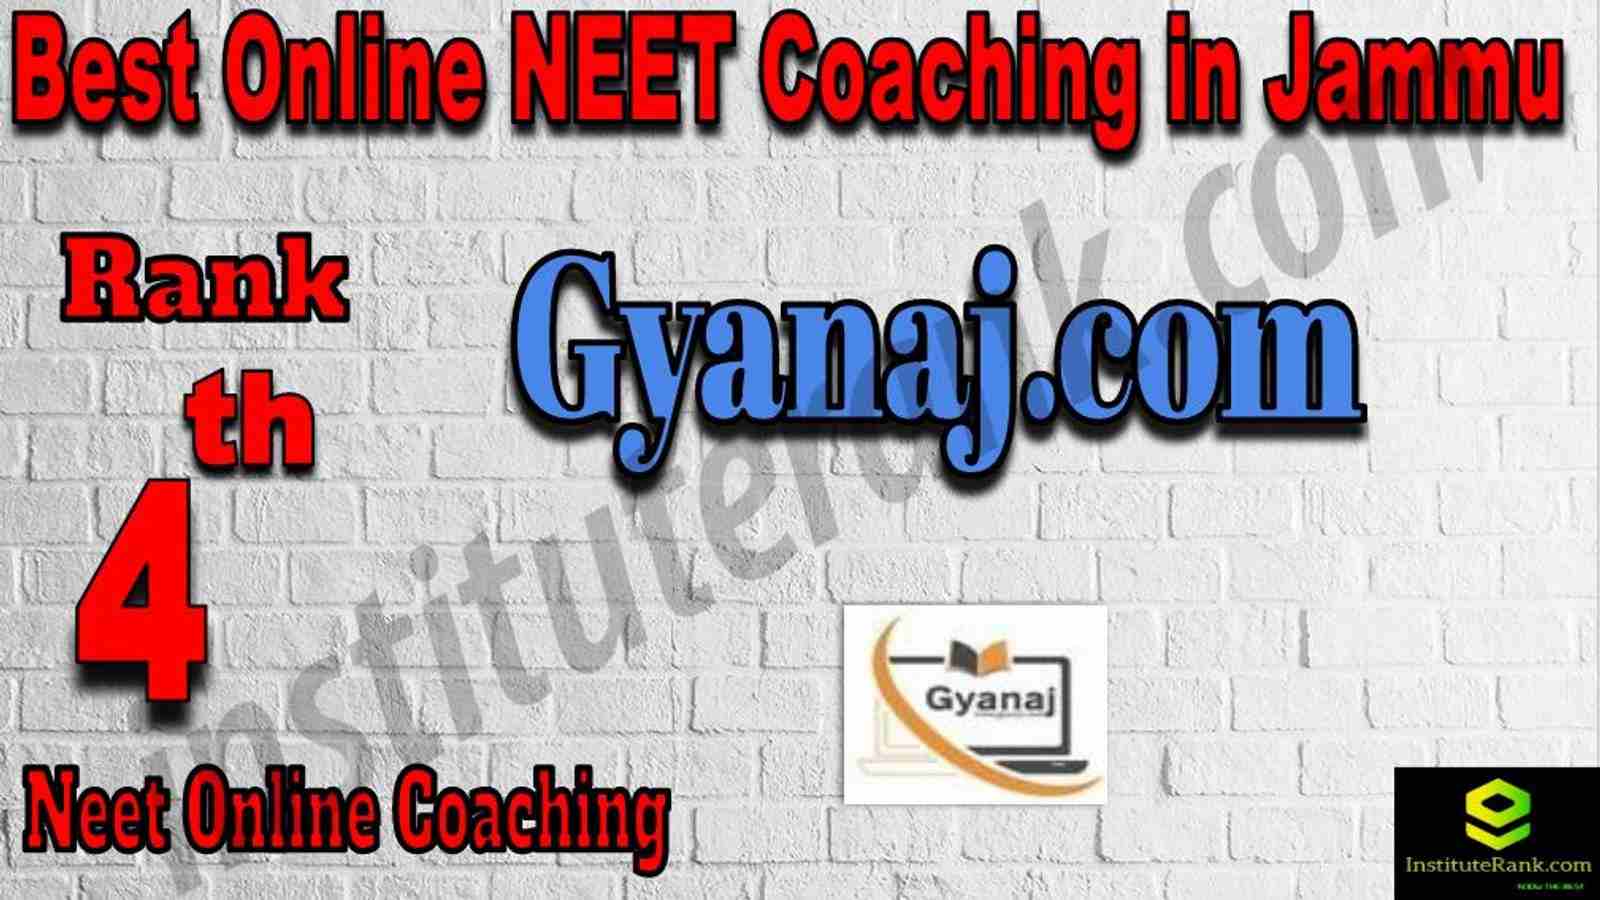 4th Best Online Neet Coaching in Jammu